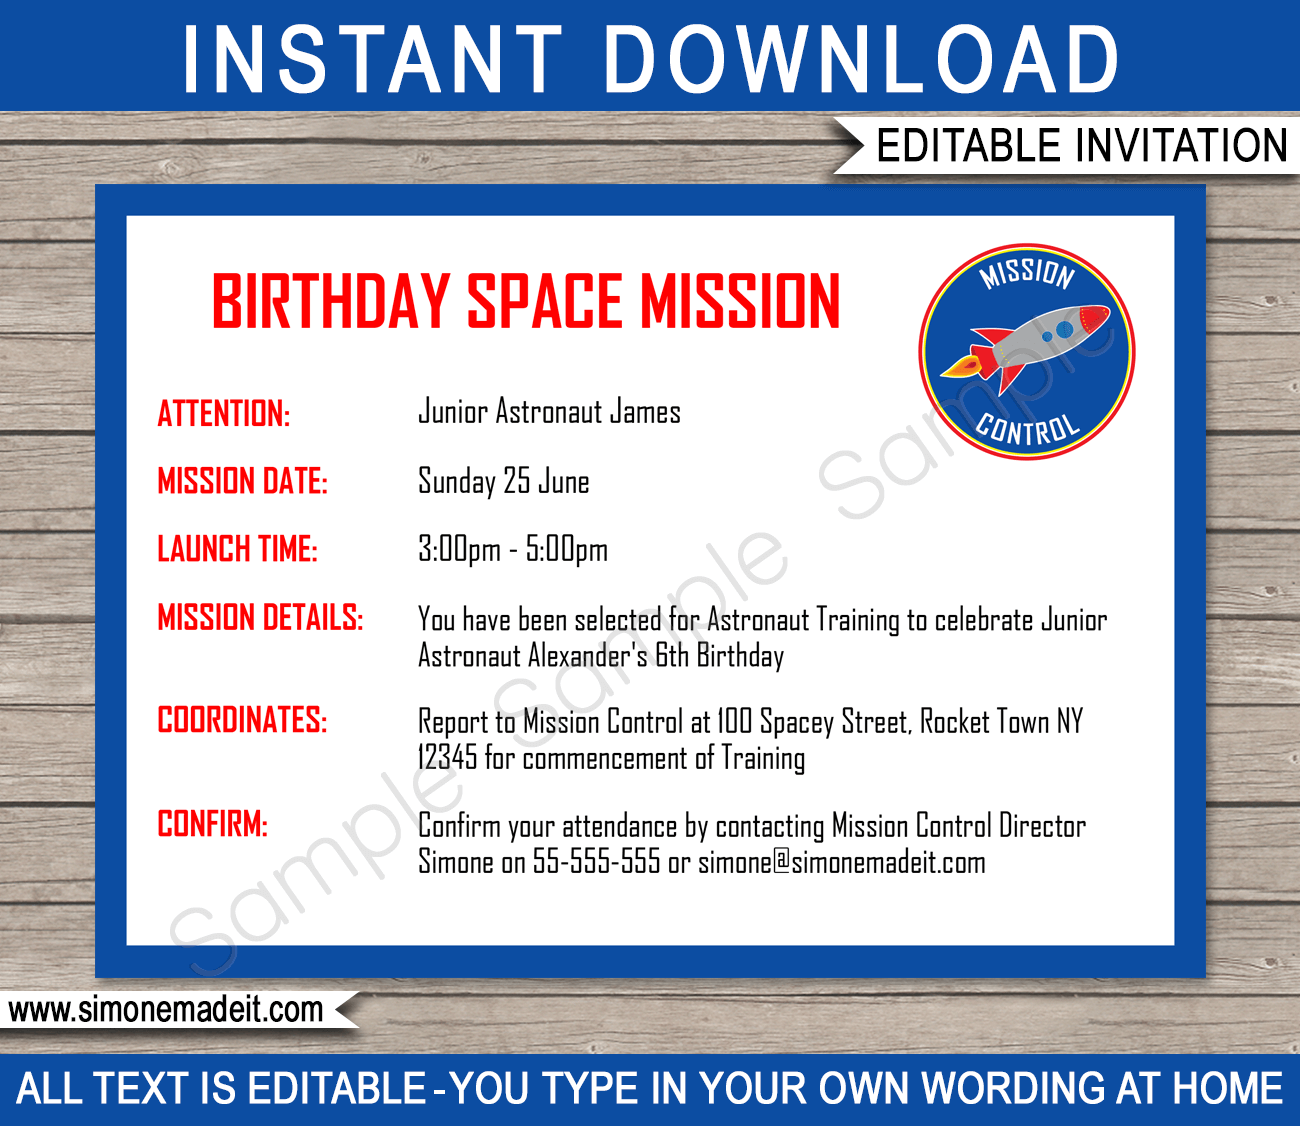 Space Party Invitations | Astronaut Training | Birthday Party | Editable DIY Theme Template | INSTANT DOWNLOAD $7.50 via SIMONEmadeit.com